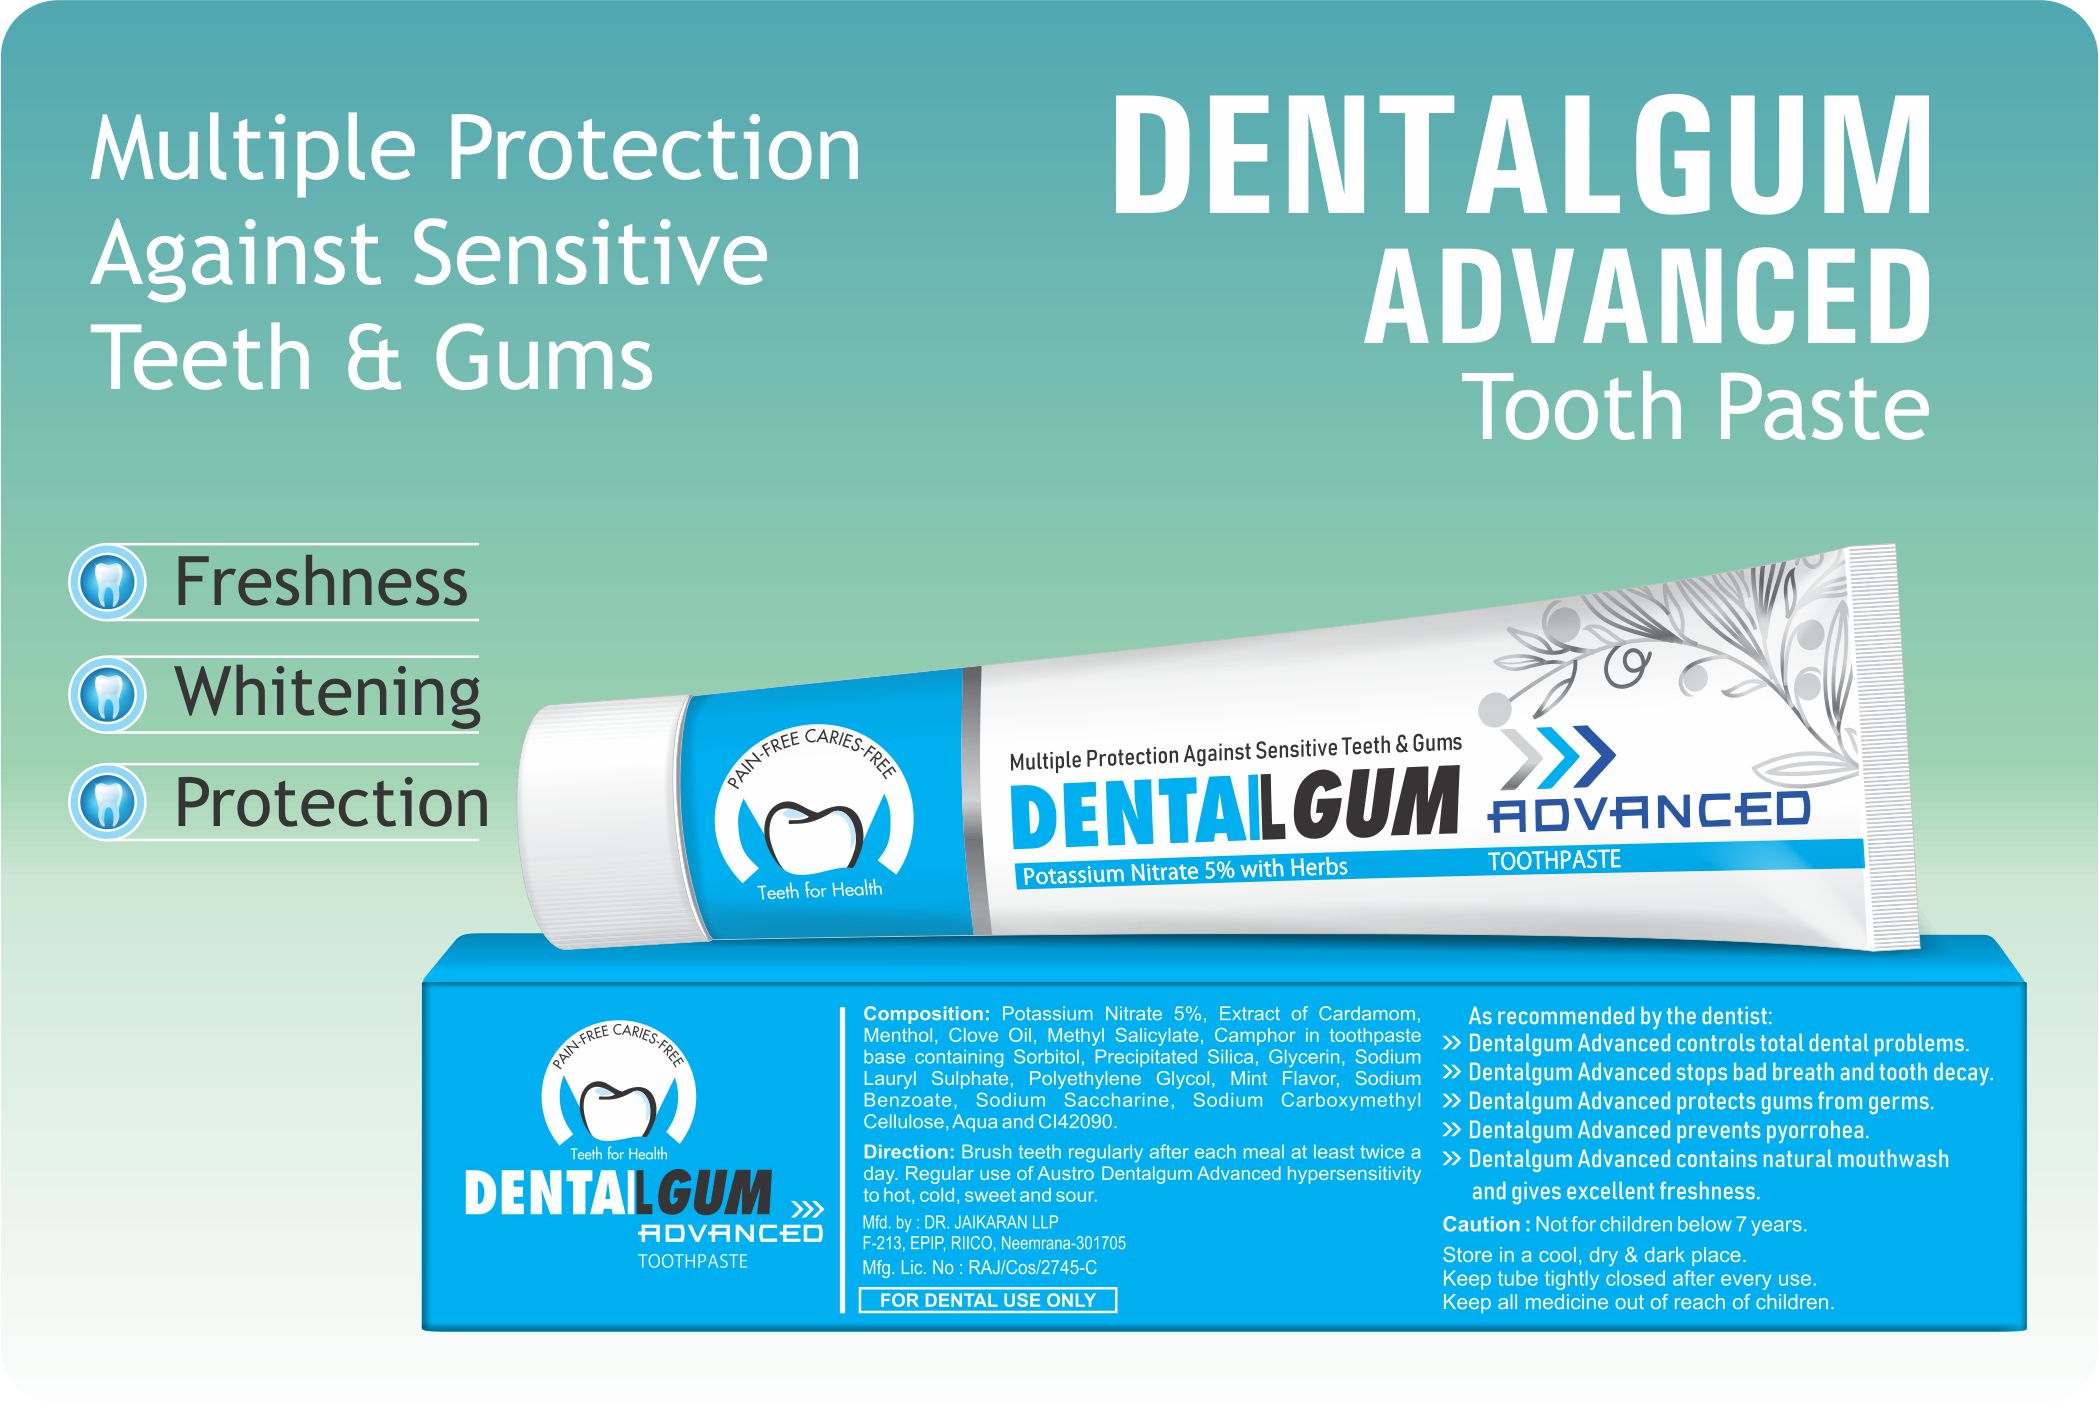 Dentalgum Advance Tooth Paste